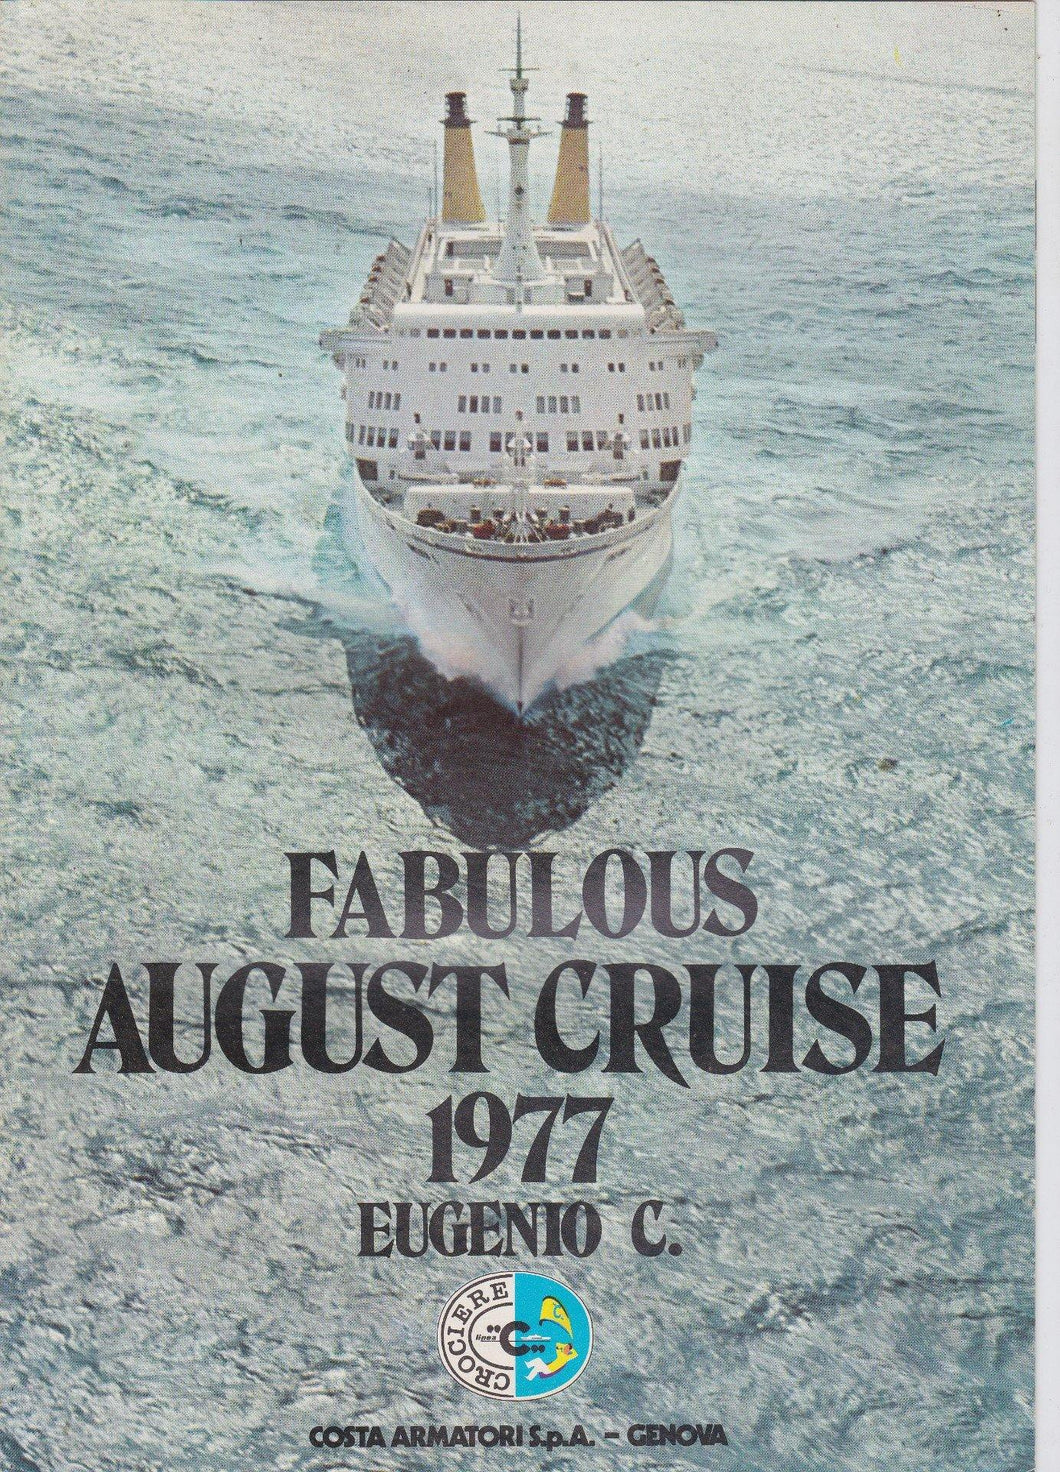 Costa Line Cruises Eugenio C August 1977 26 Day Caribbean Cruise Brochure - TulipStuff